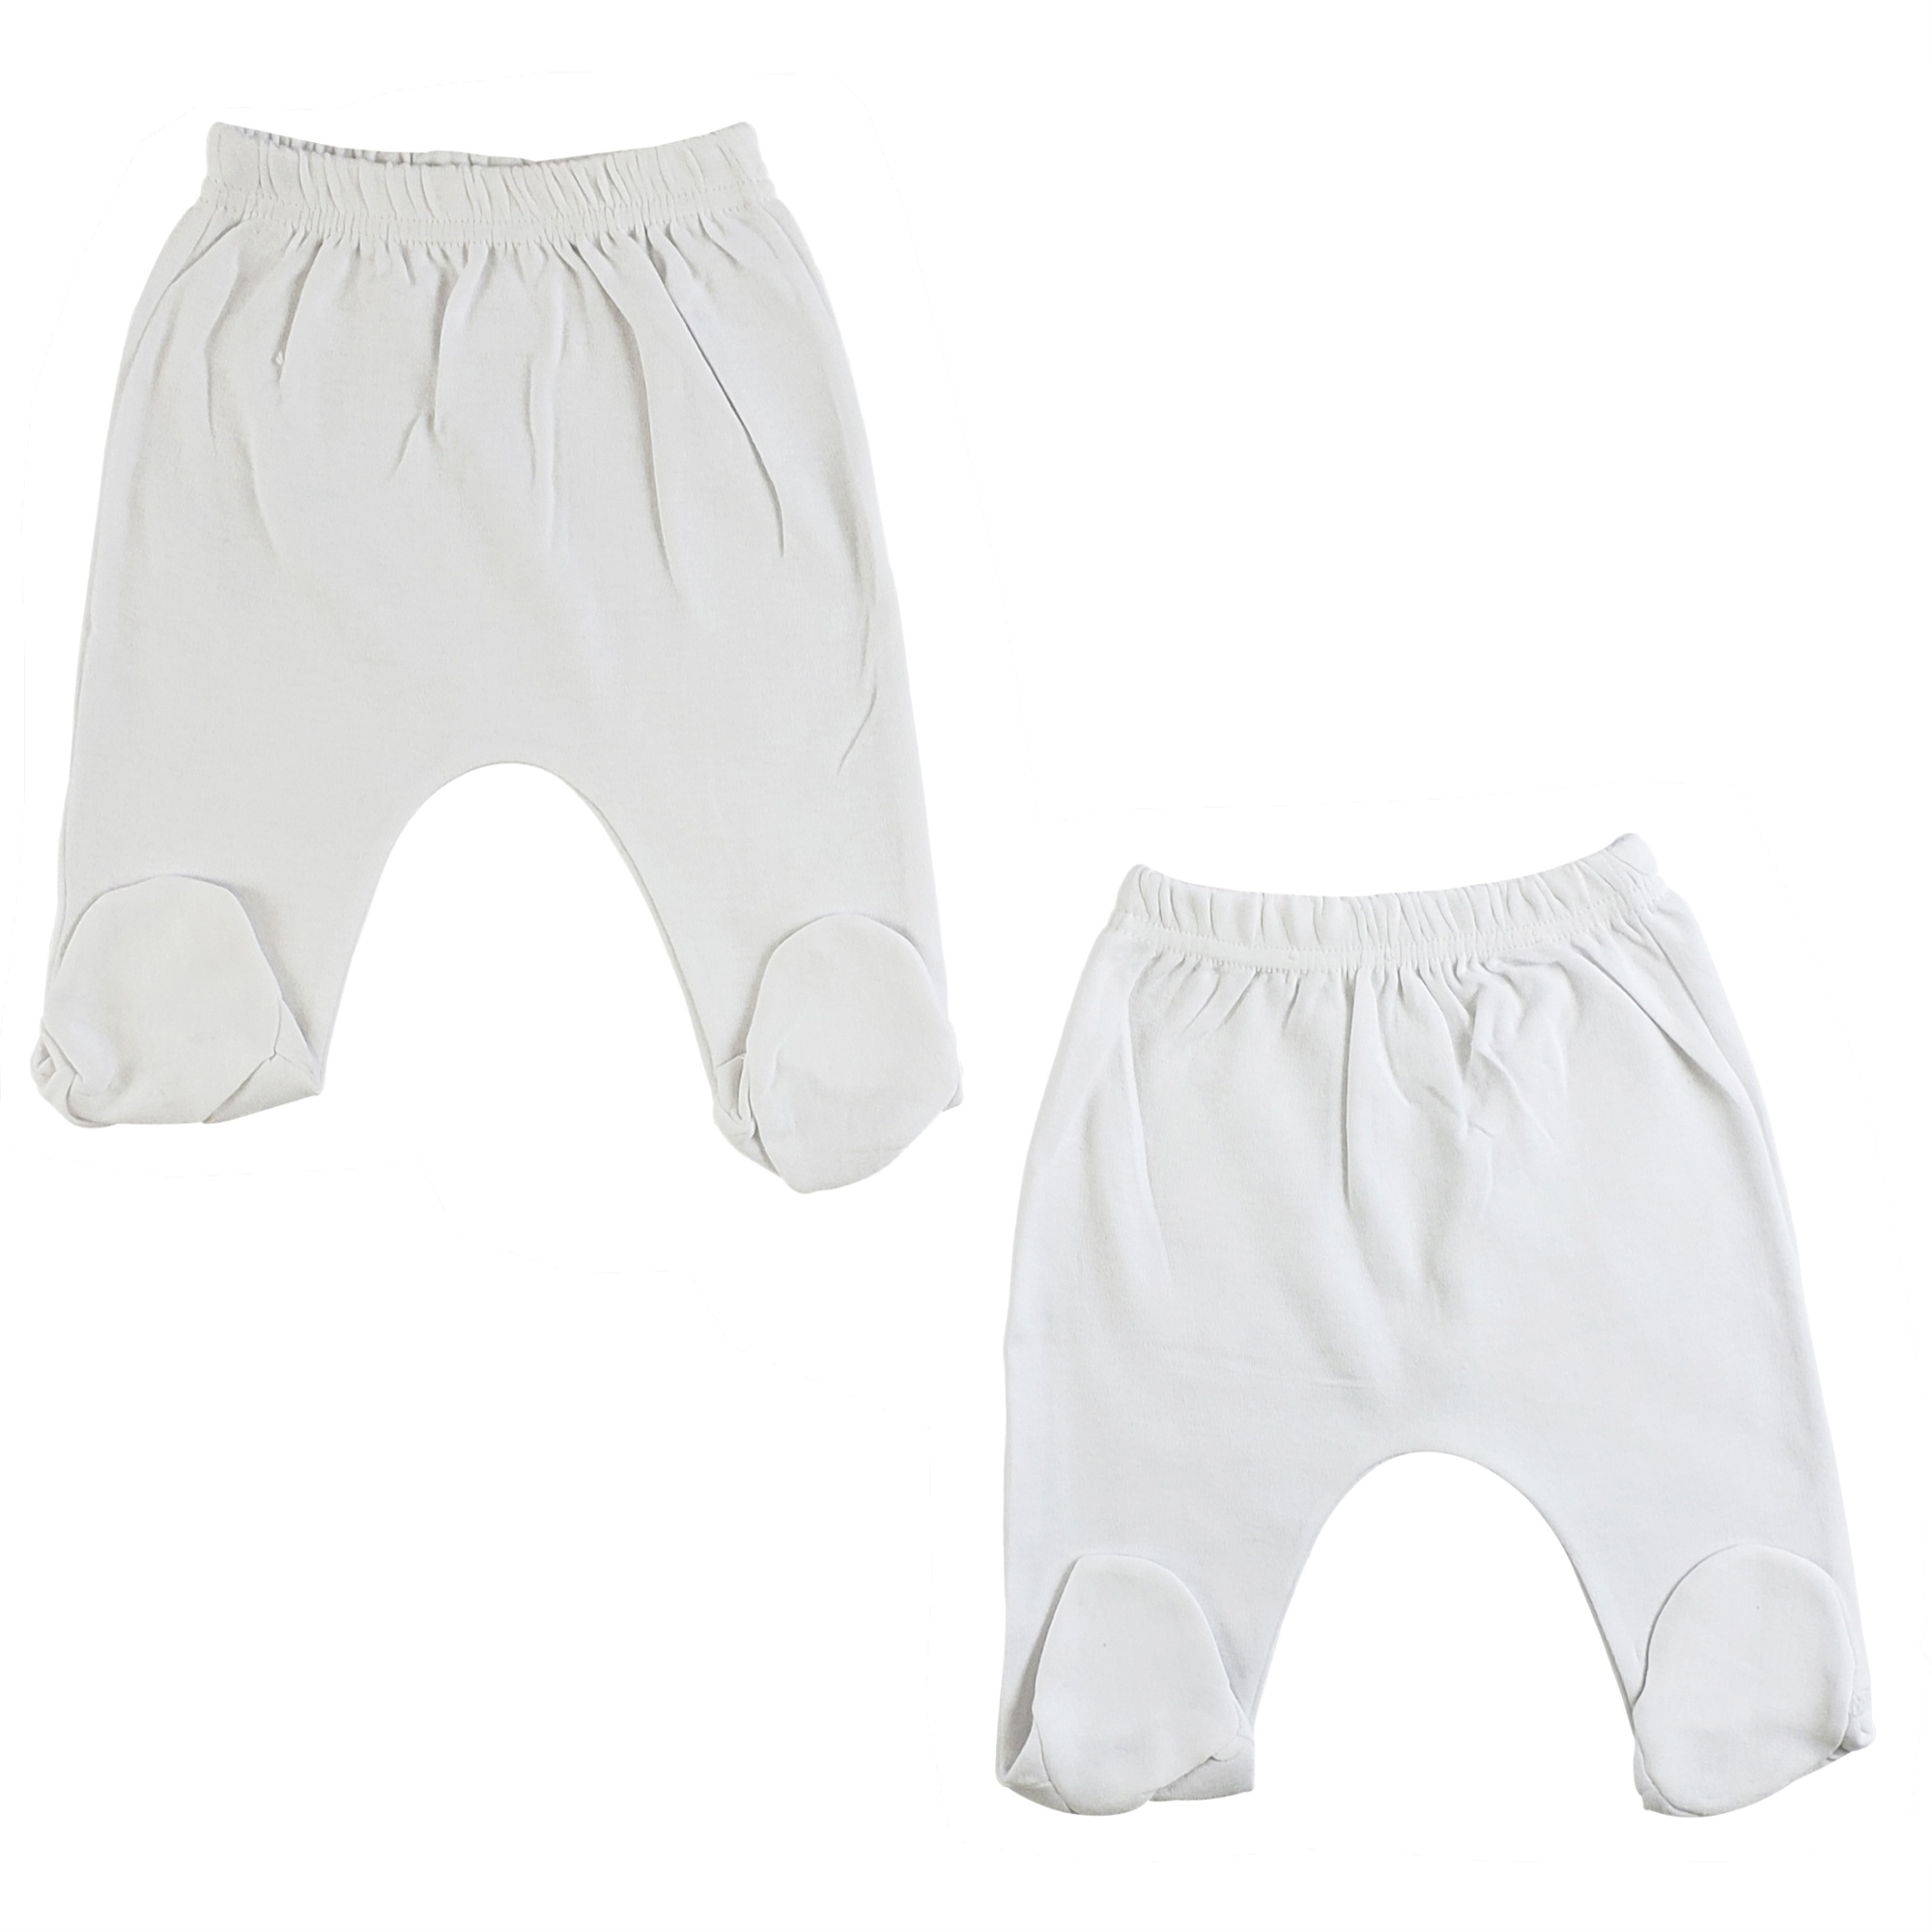 Bambini White Closed Toe Pants - 2 Pack